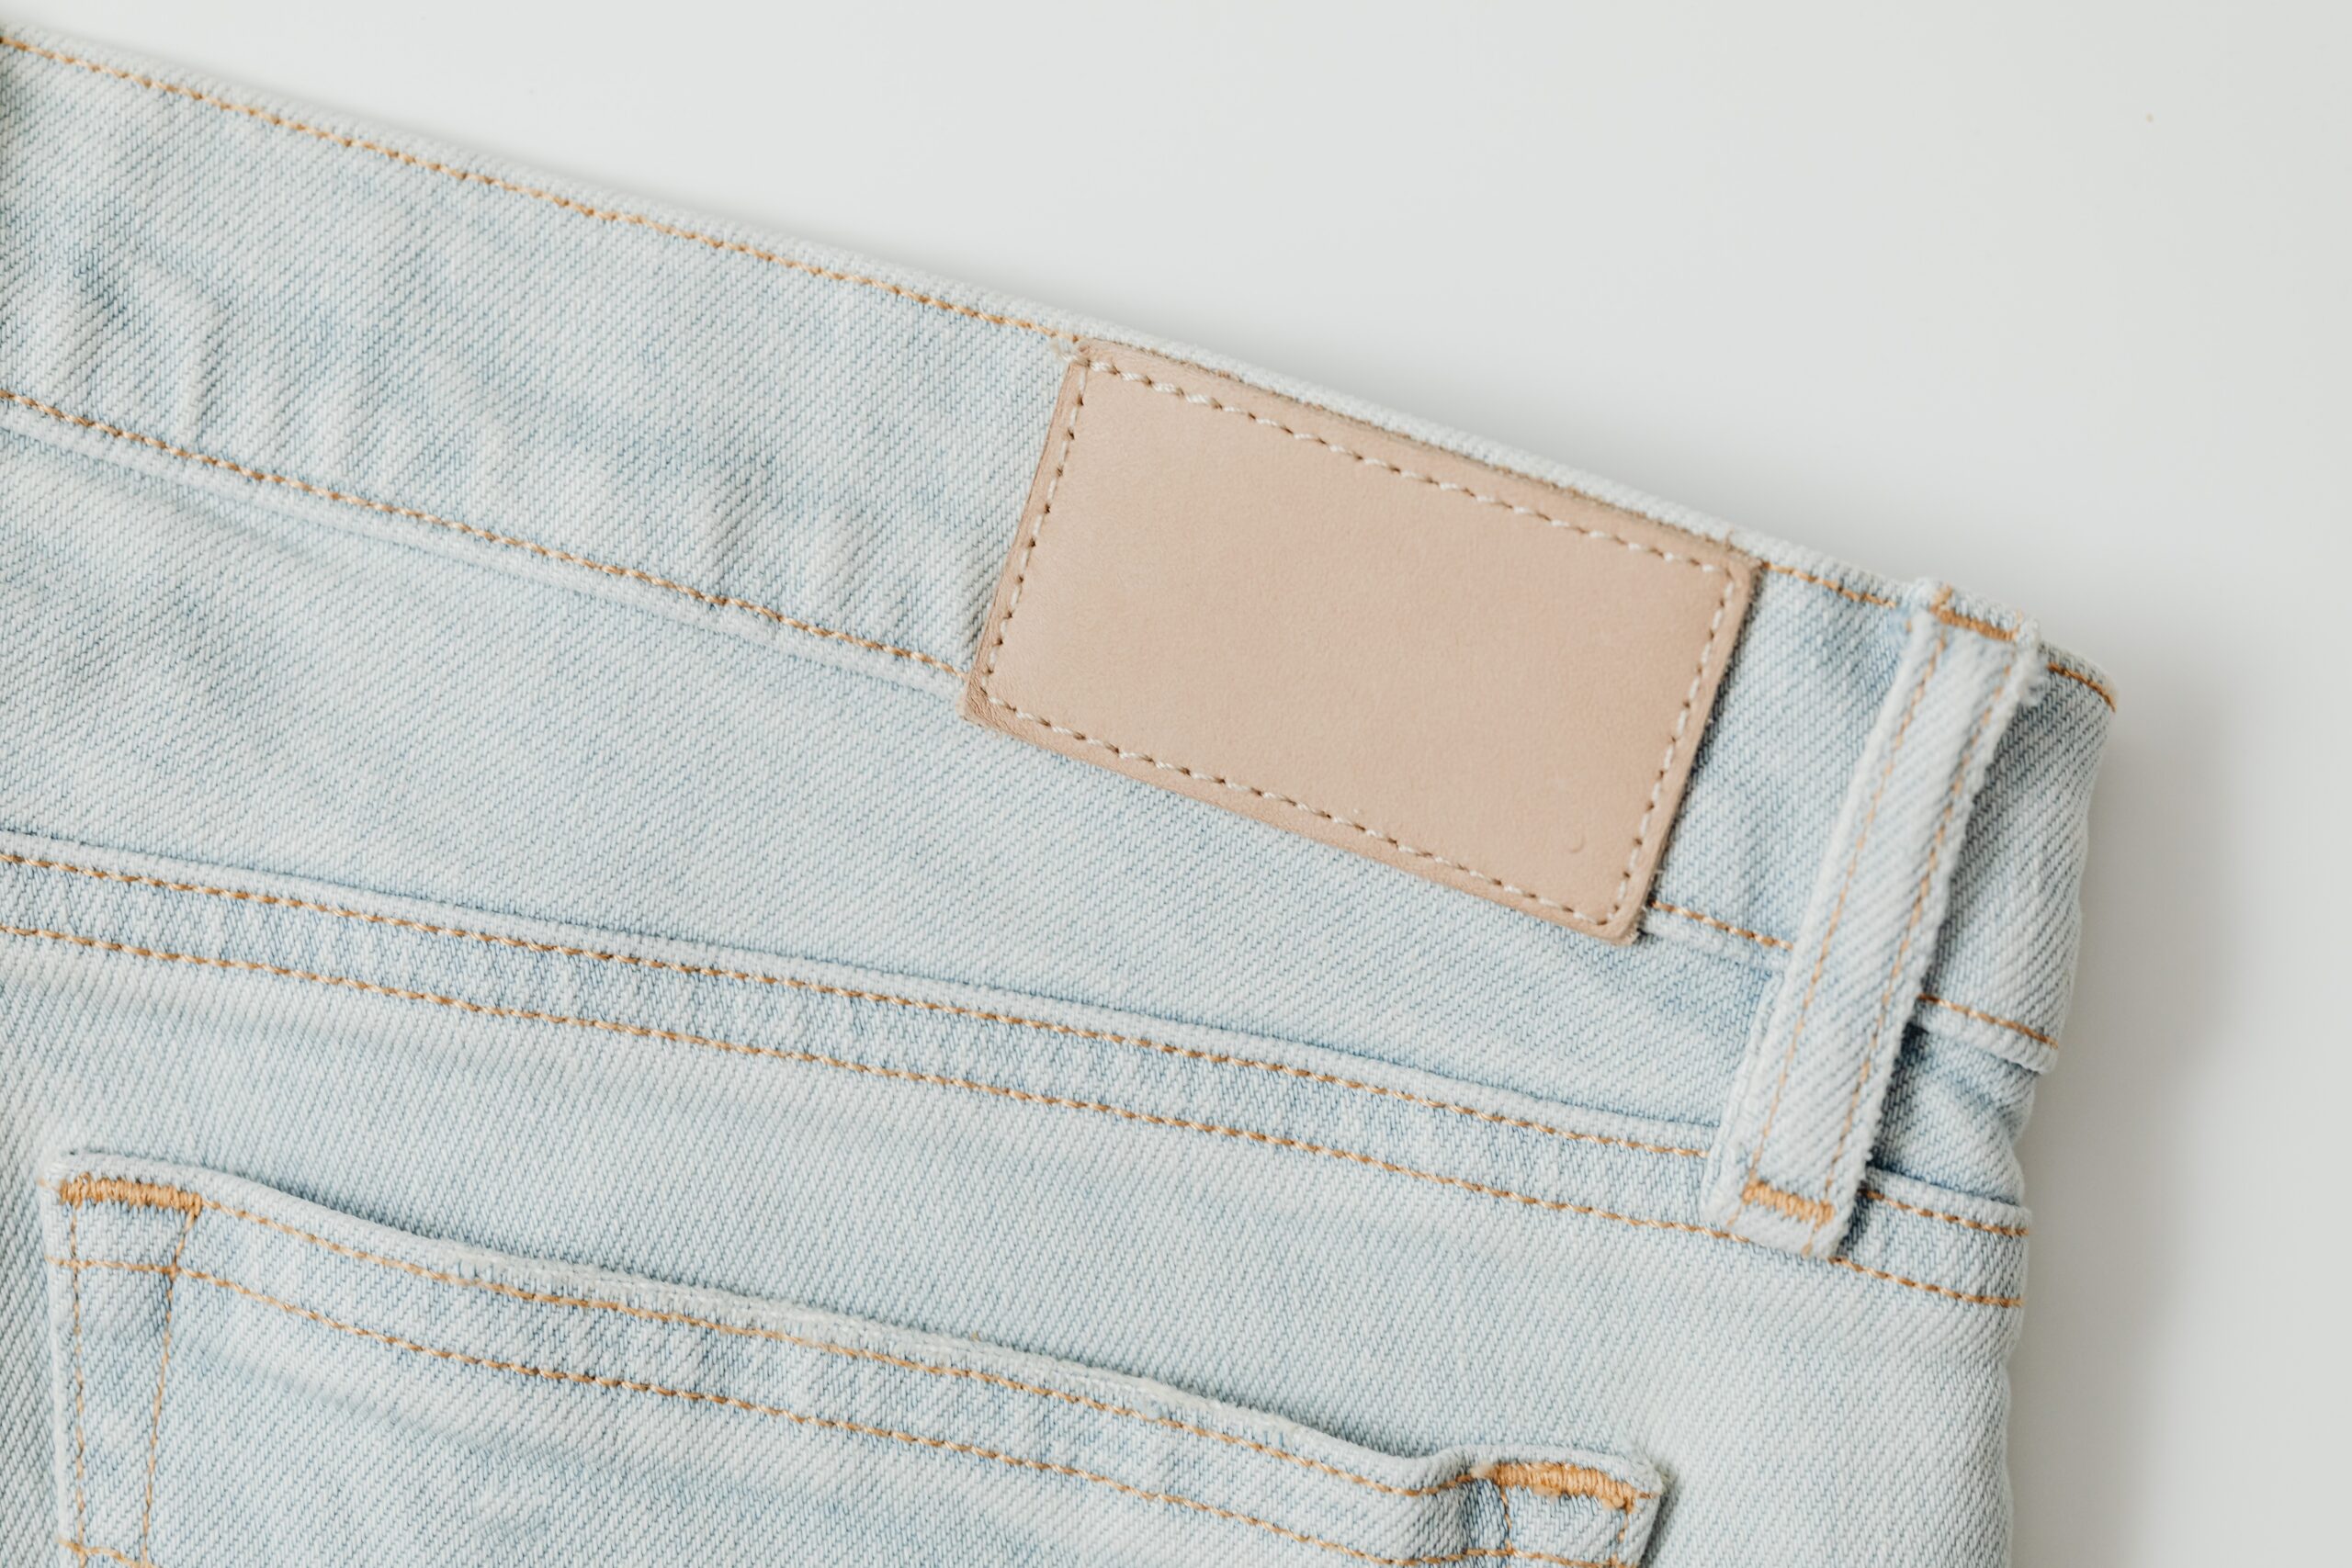 Close-up photograph of denim jeans